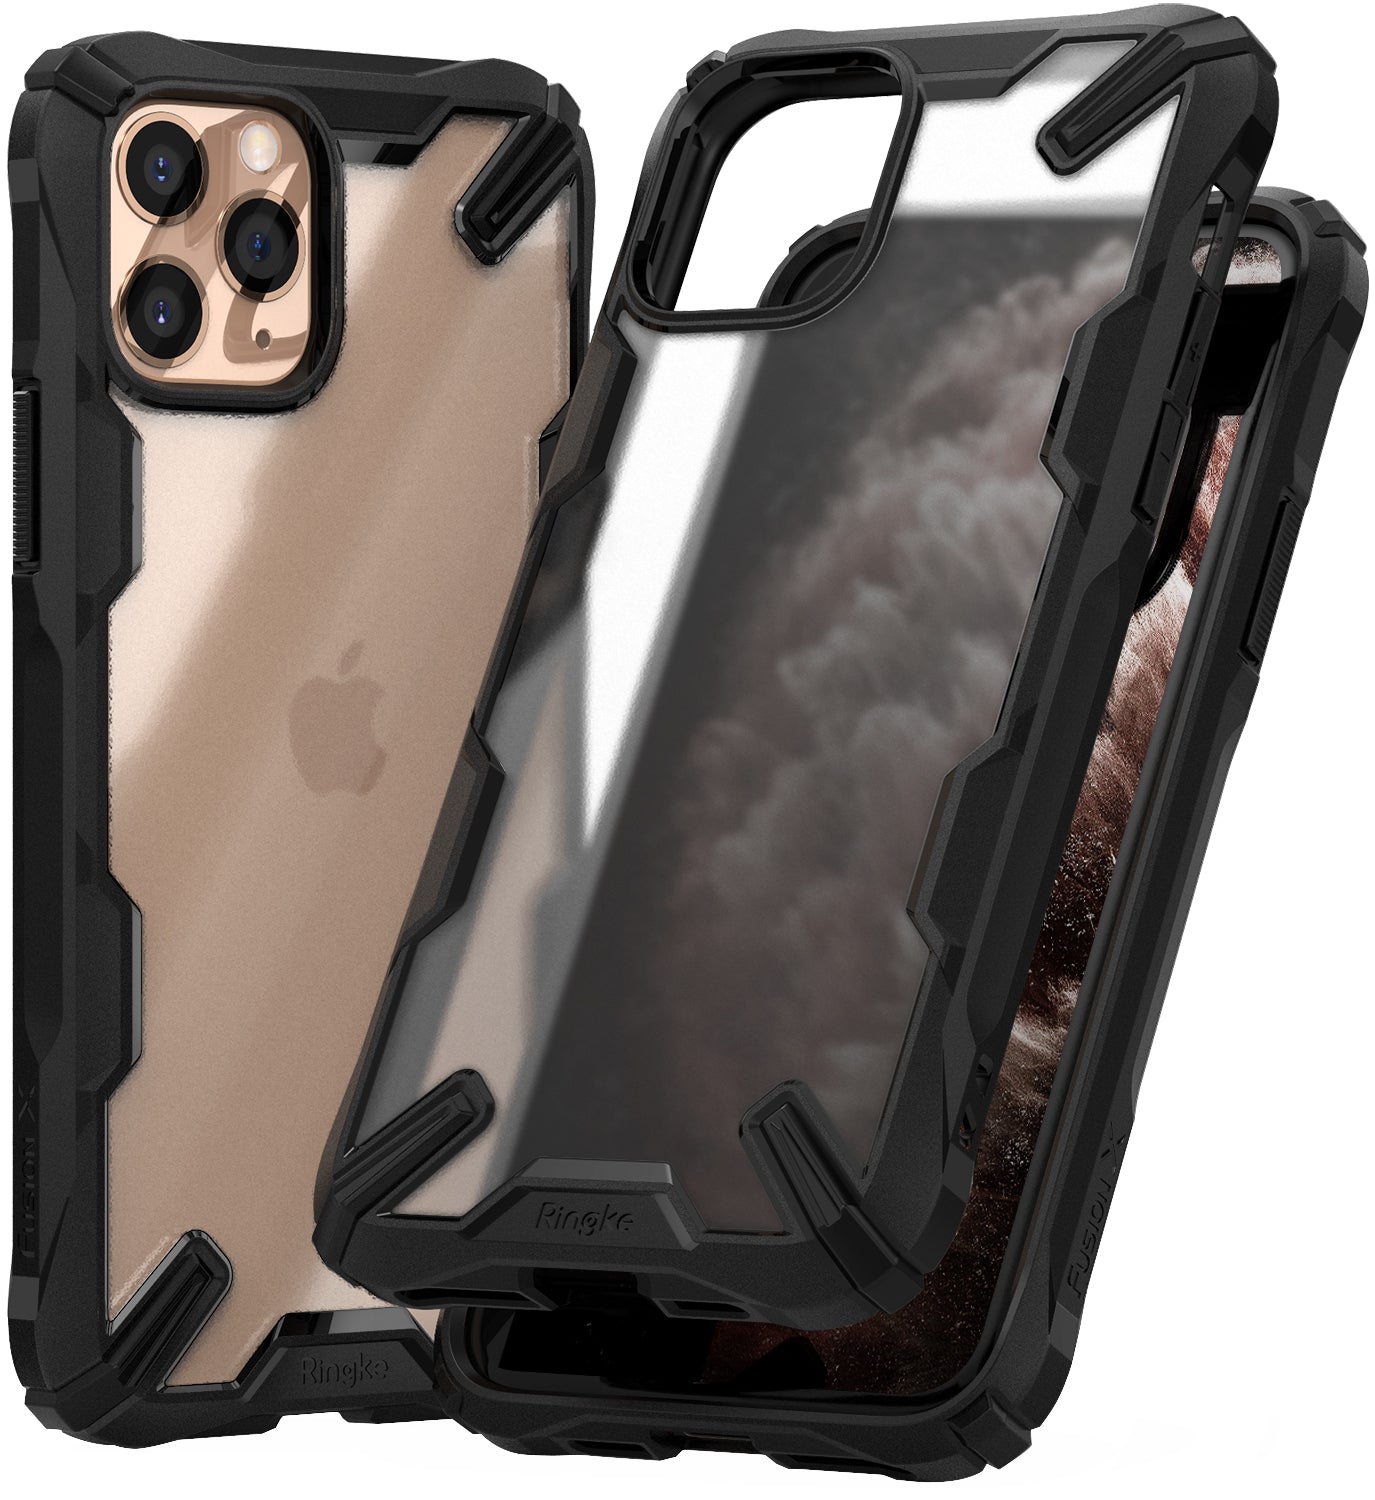 Ringke Fusion-X Matte Designed Case for iPhone 11 Pro Matte Black